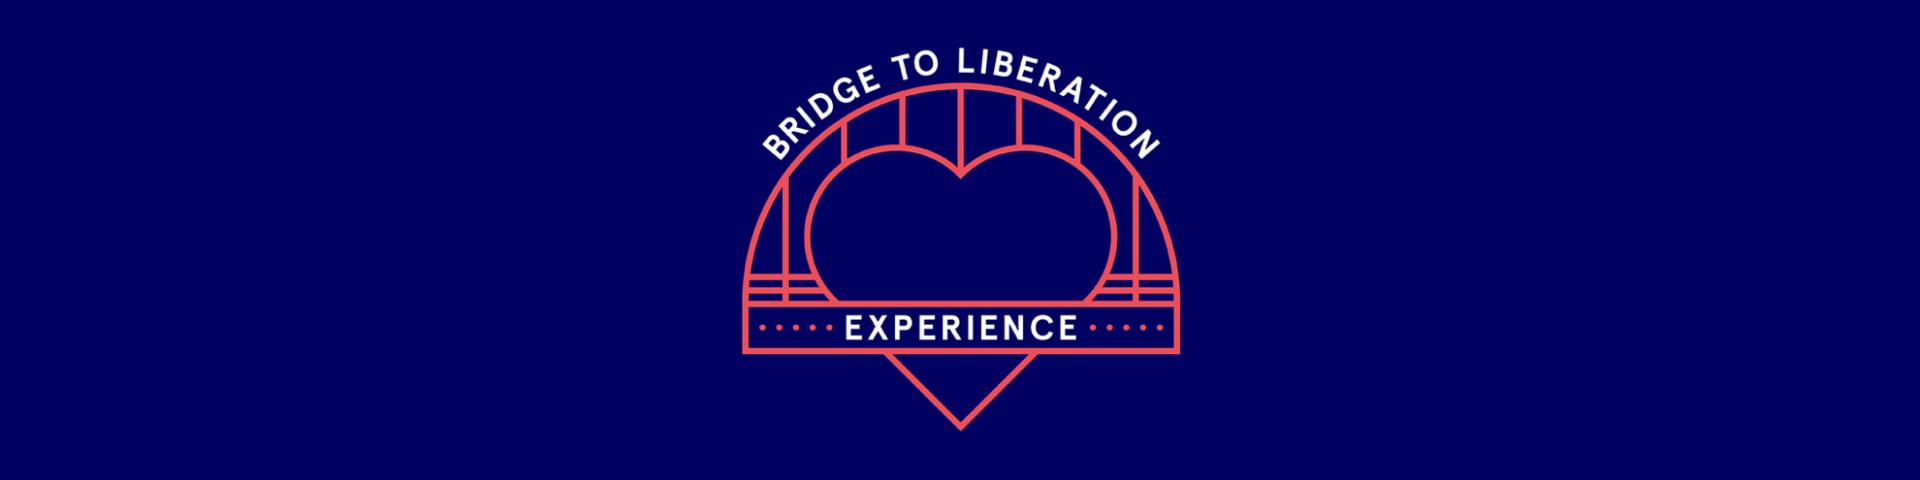 Bridge to Liberation Experience 2018